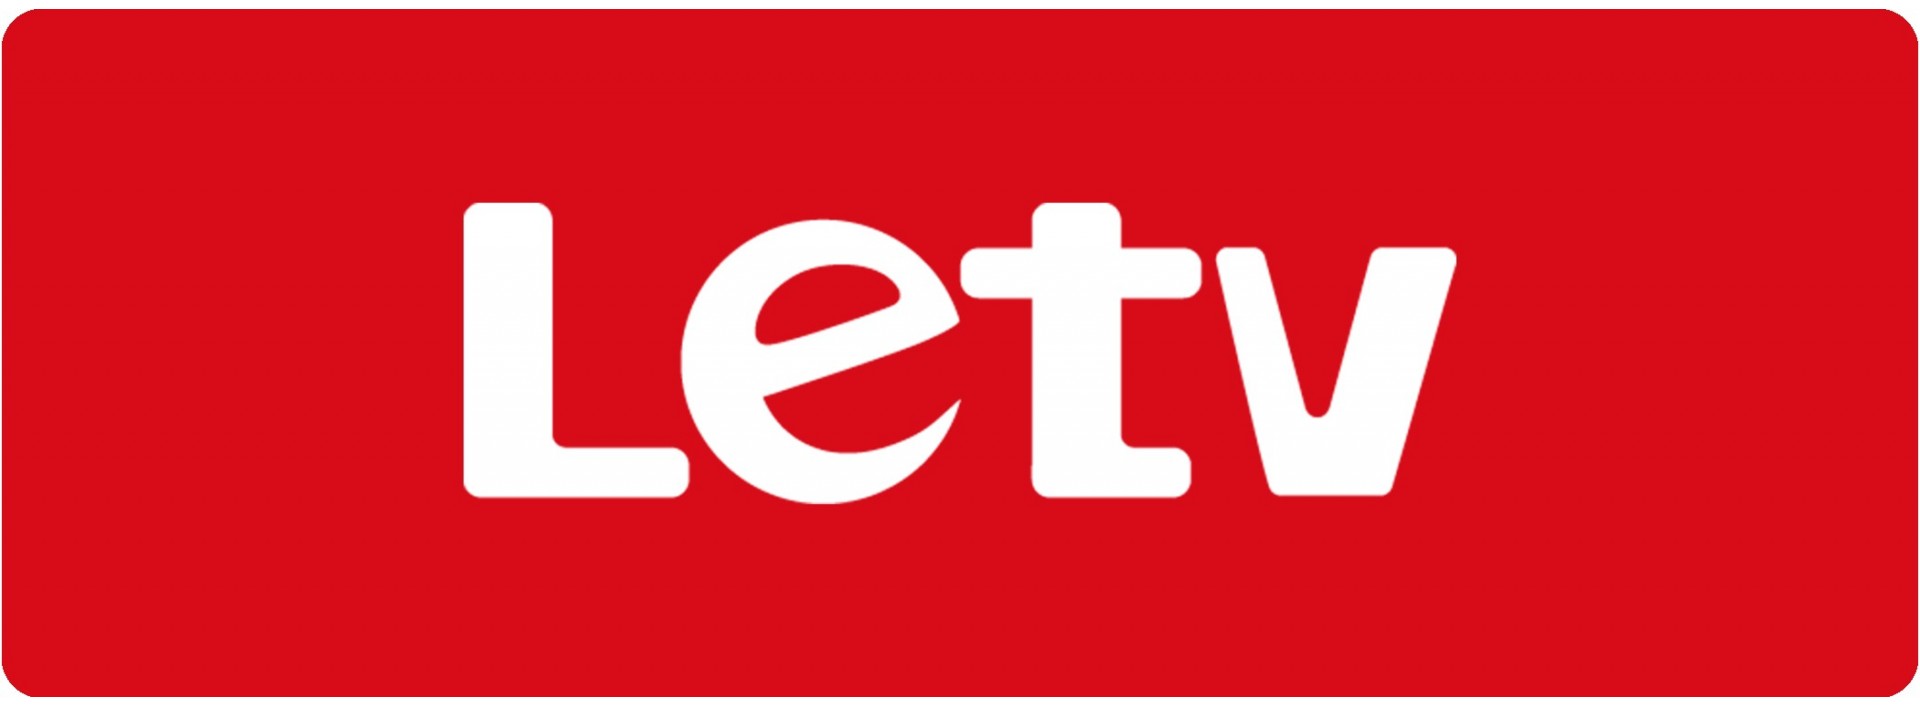 Fundas para LETV | TuMundoSmartphone | Envio Gratis